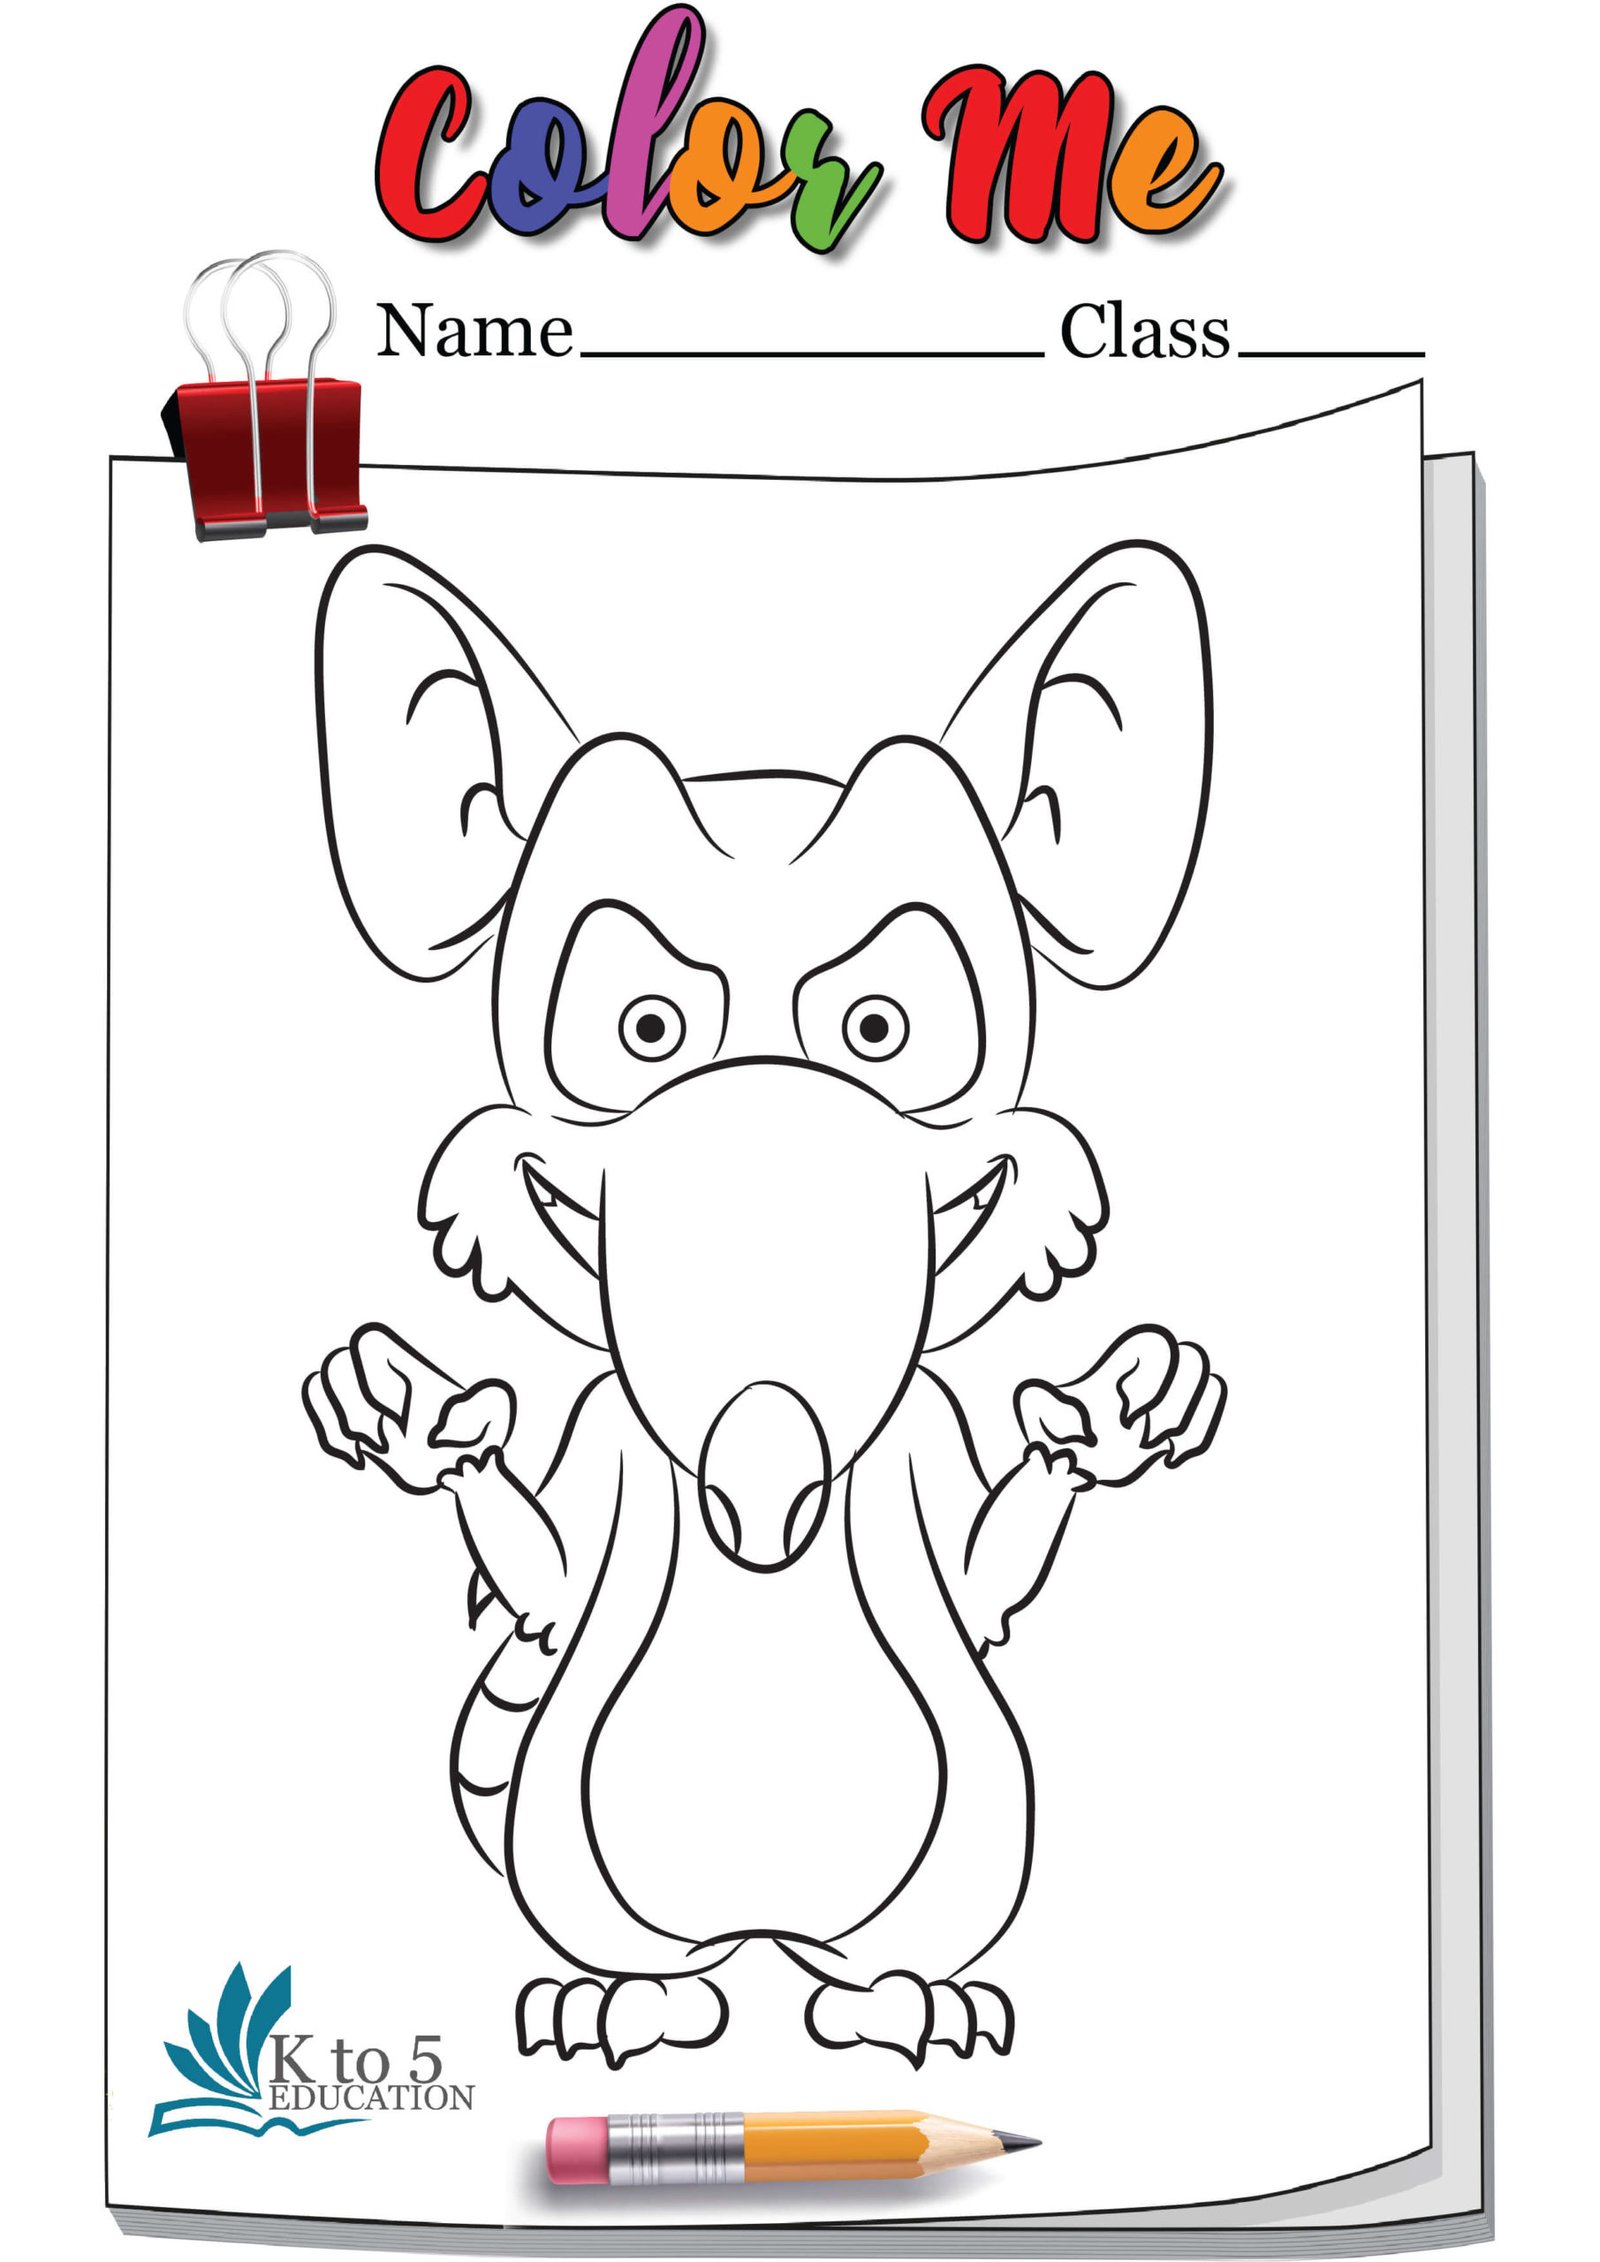 Happy Rat coloring page worksheet